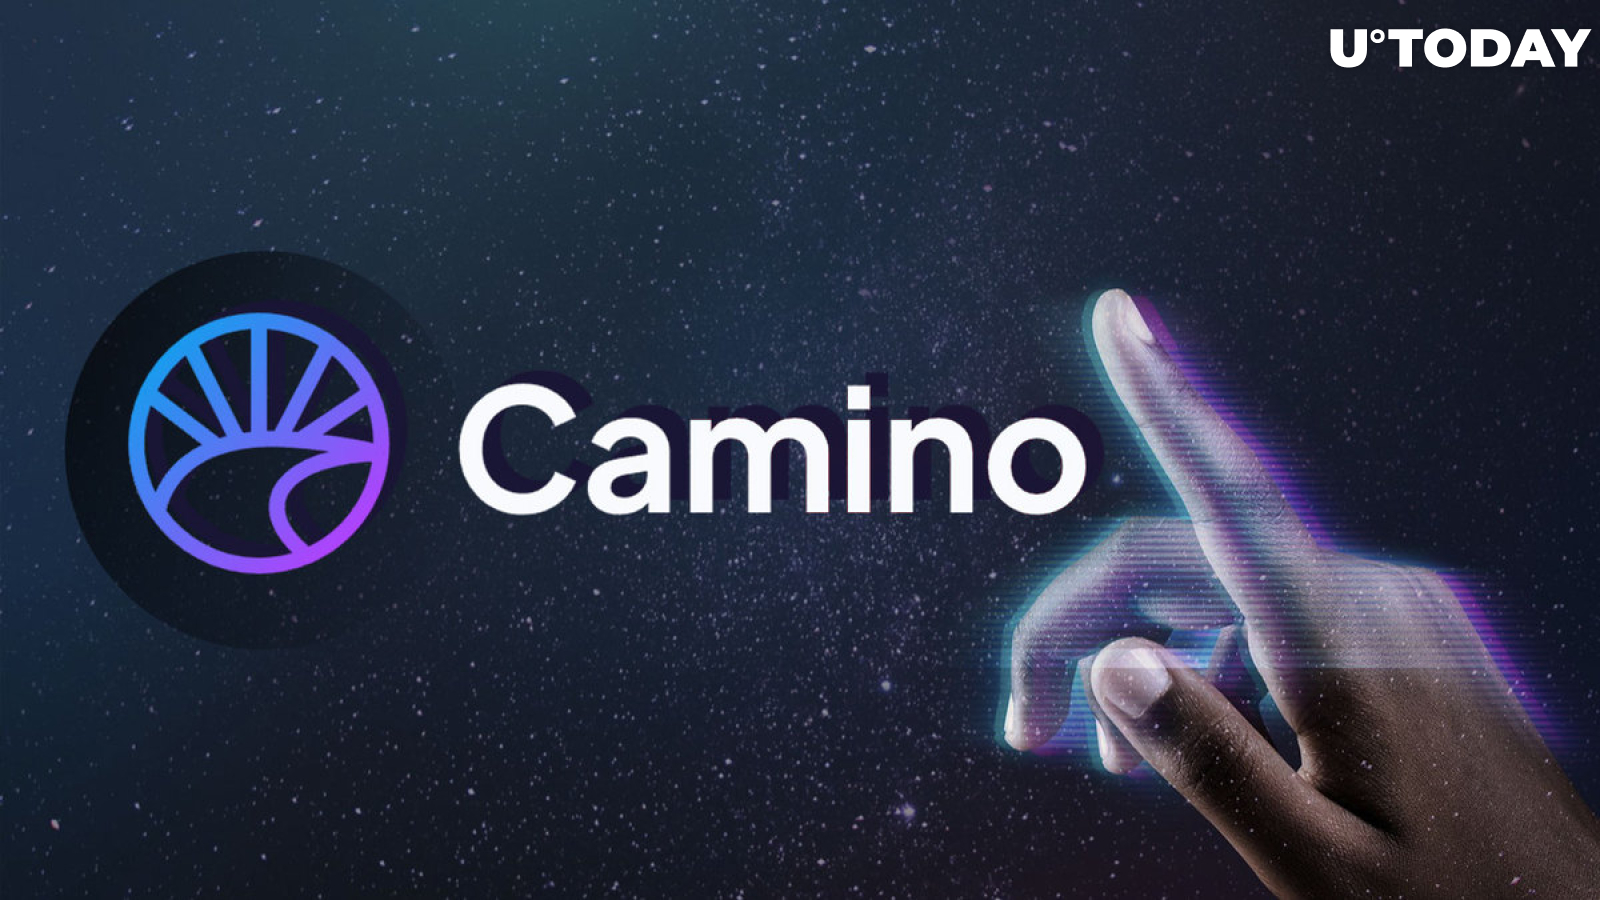 Camino Network (CAM), Web3 Travel Platform, Goes Live in Mainnet